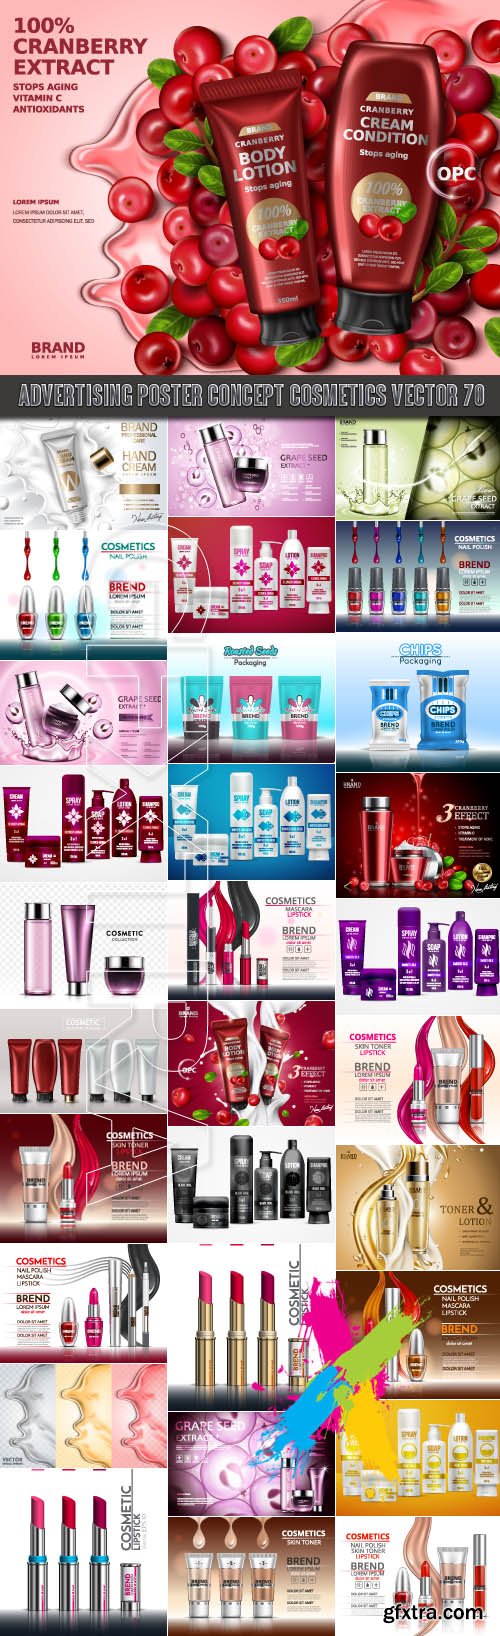 Advertising Poster Concept Cosmetics vector 70